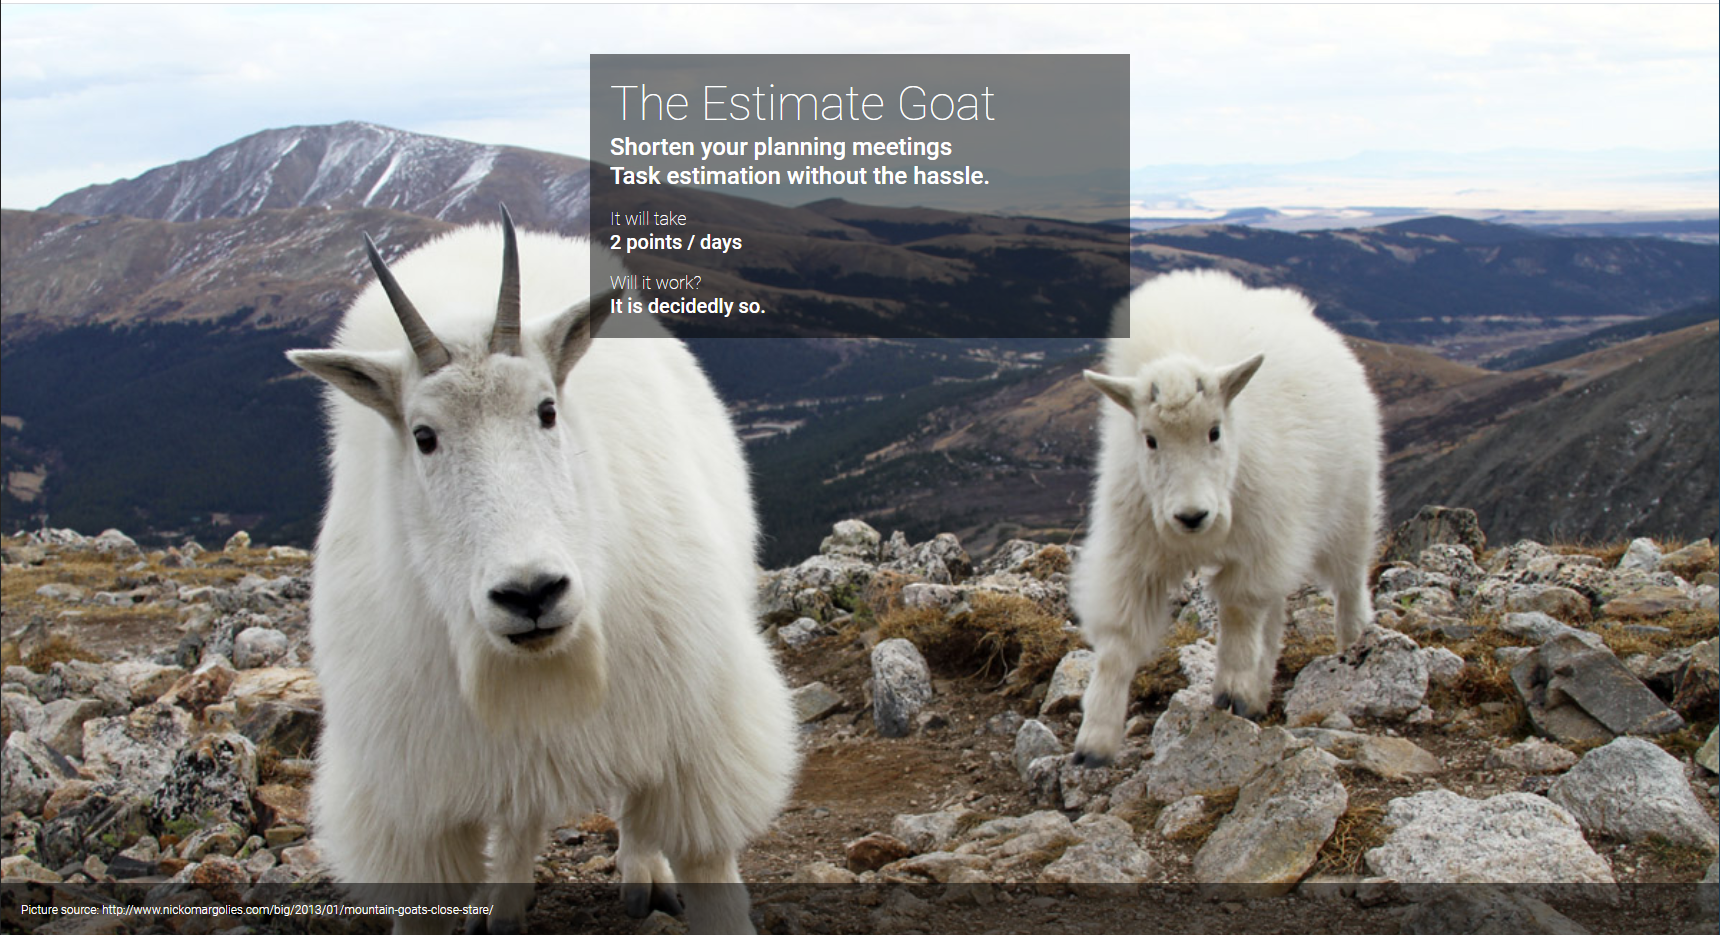 An estimation by the estimate goat